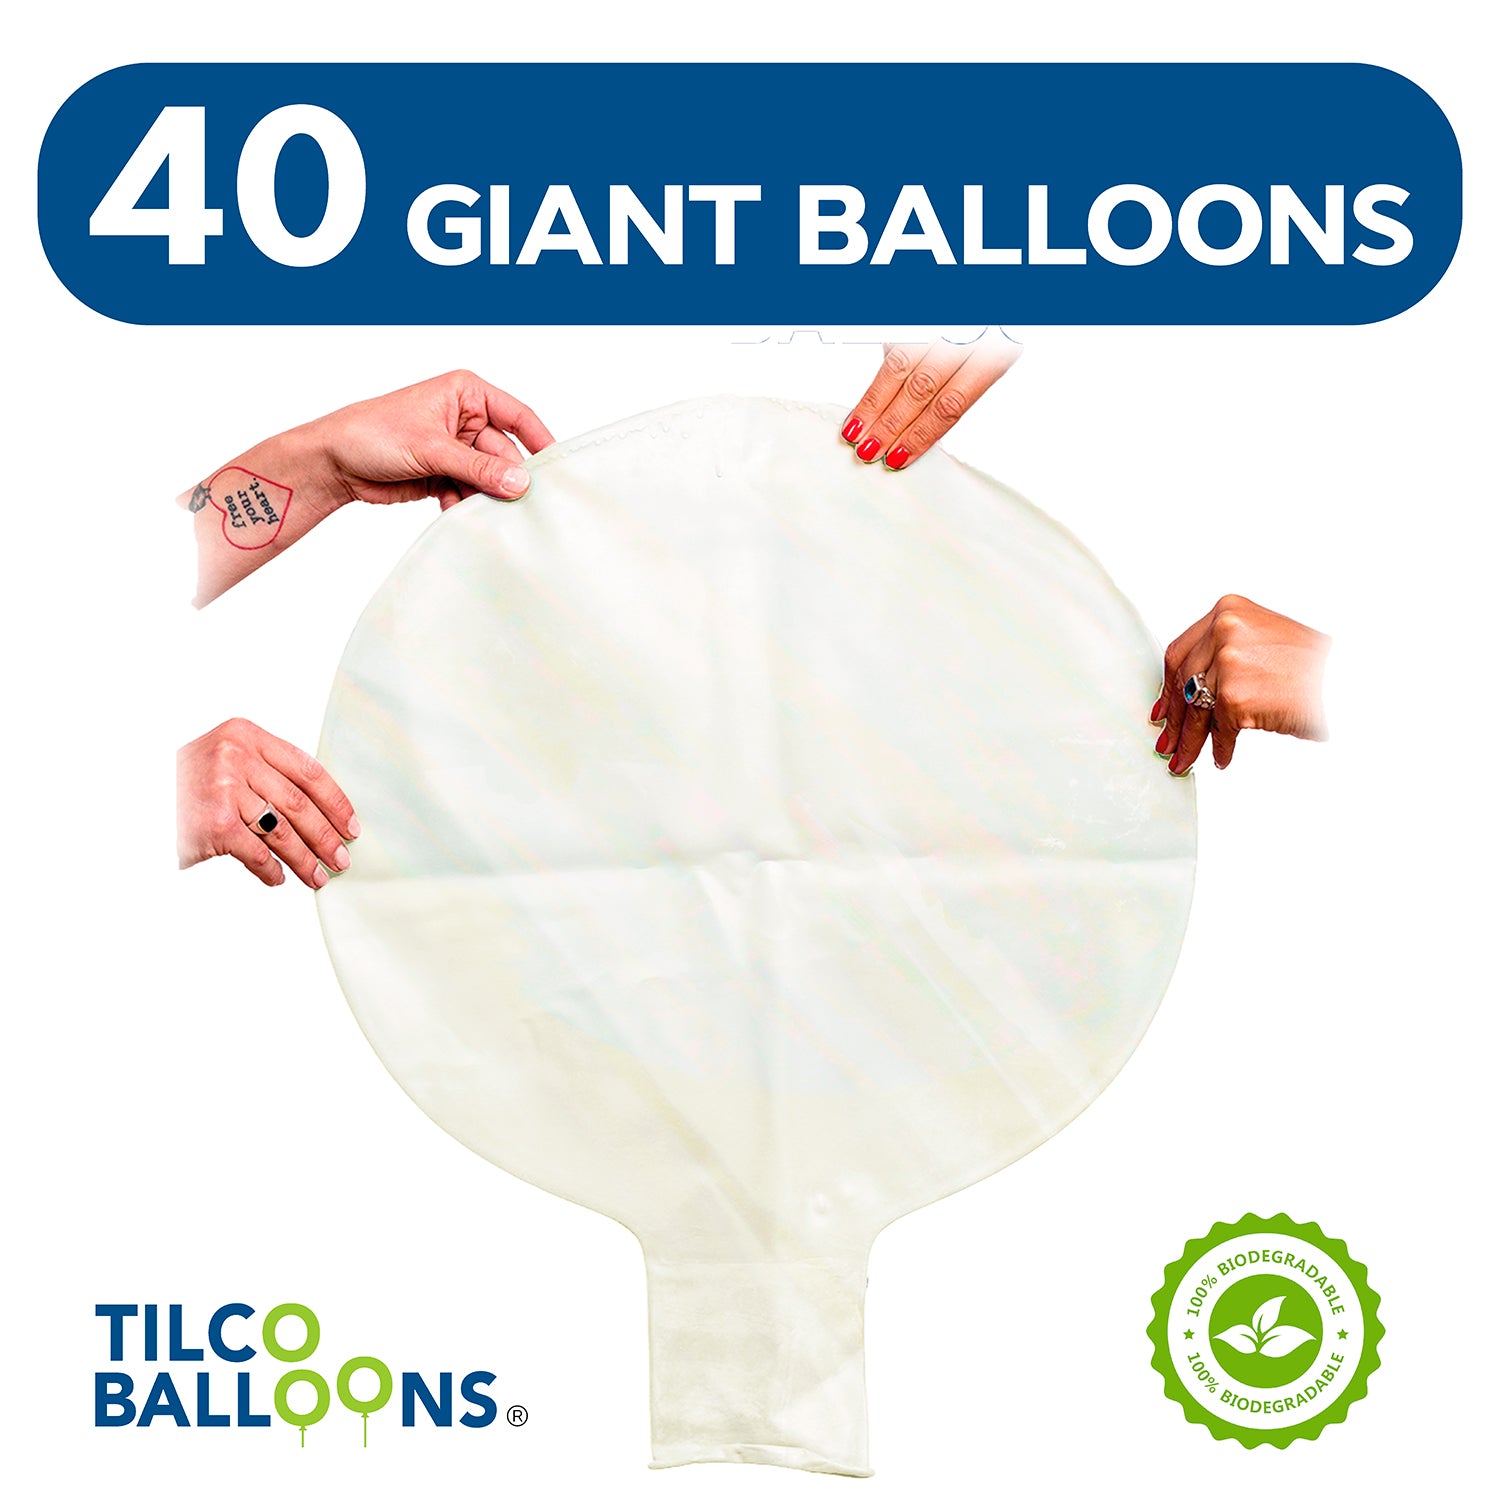 40 Giant Balloons